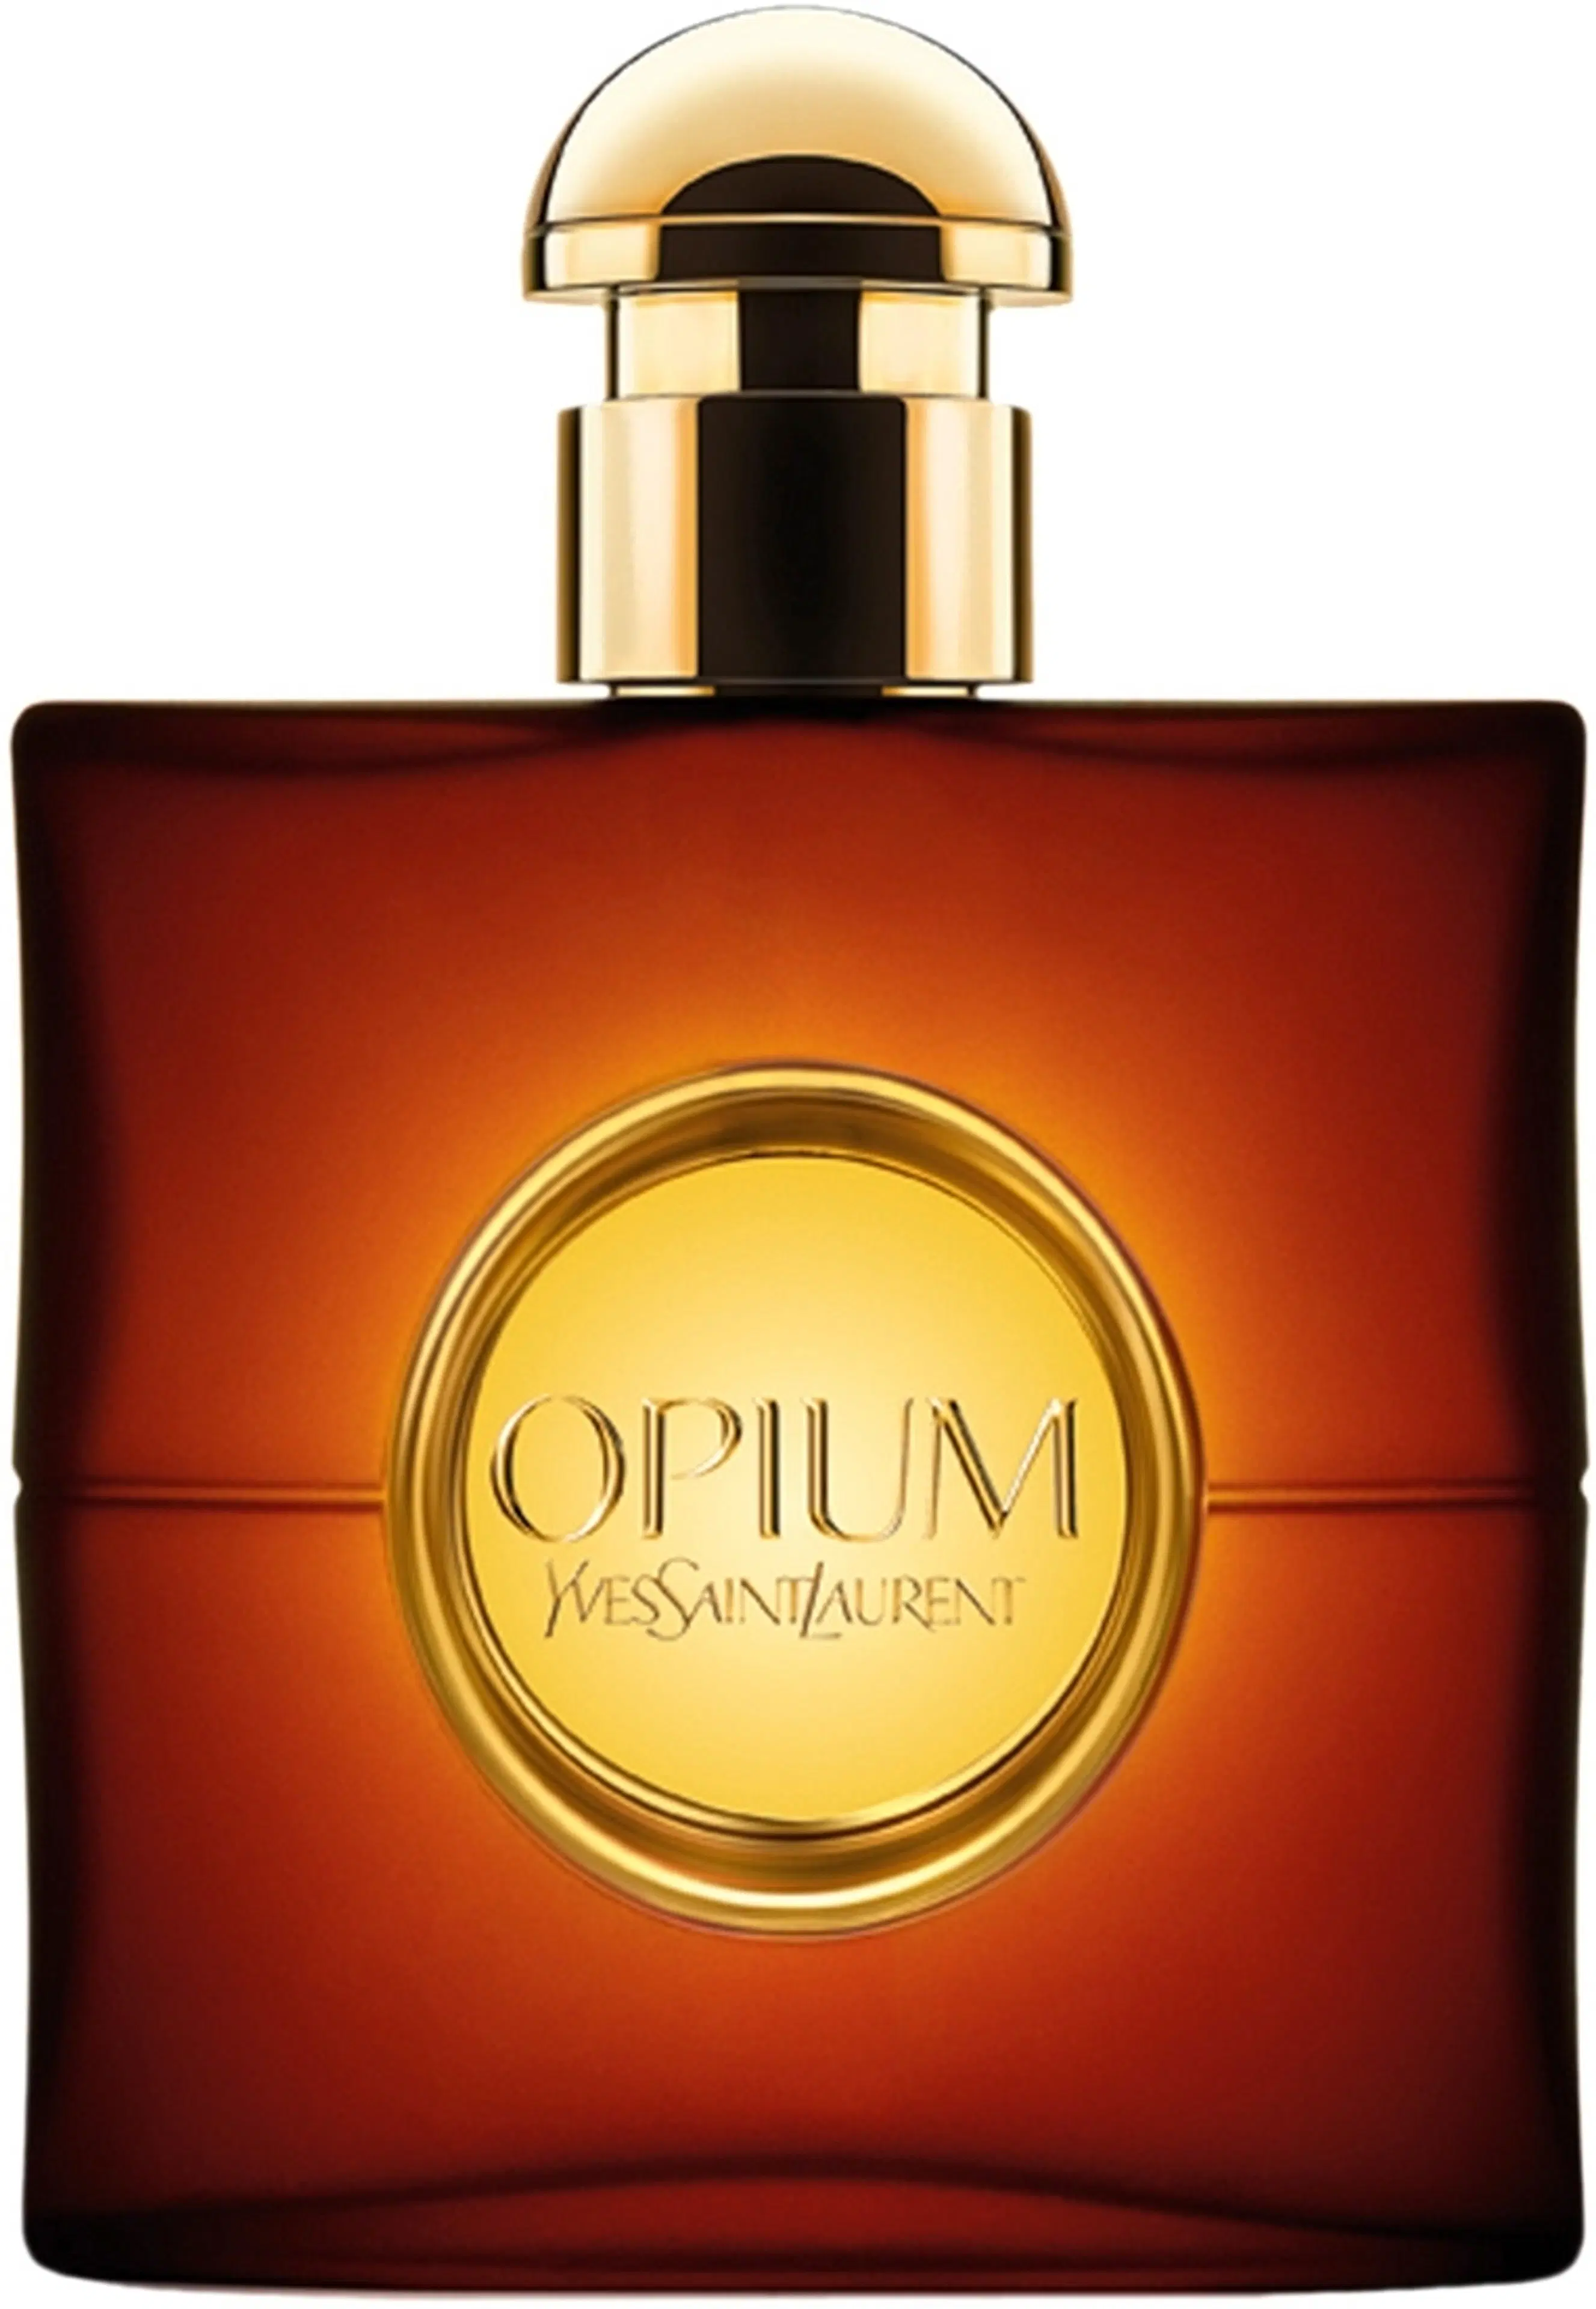 Yves Saint Laurent Opium EdT tuoksu 30 ml